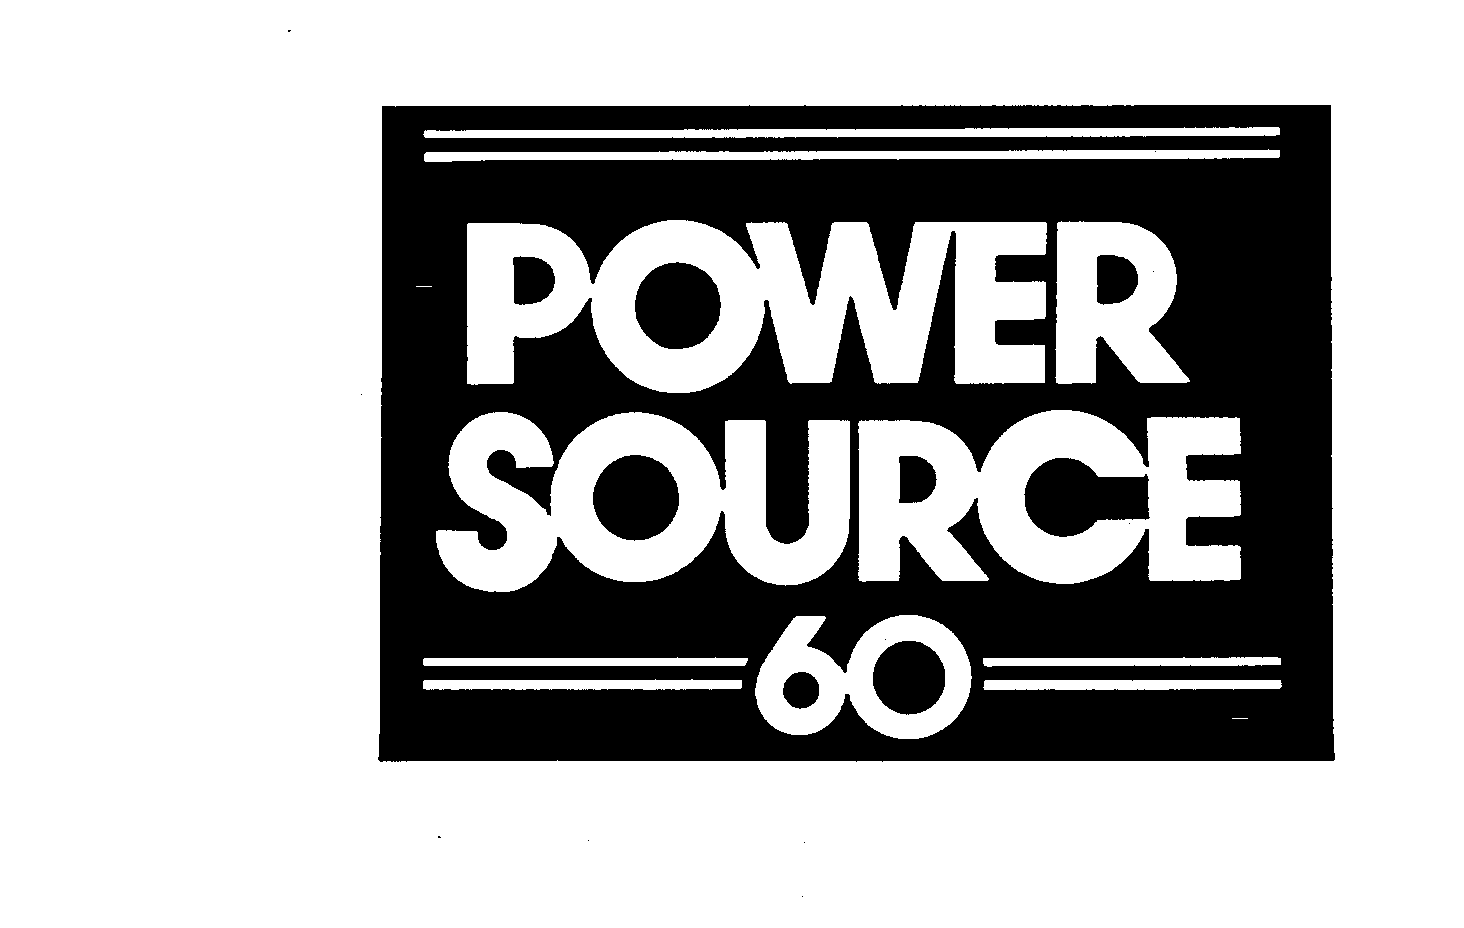  POWER SOURCE 60